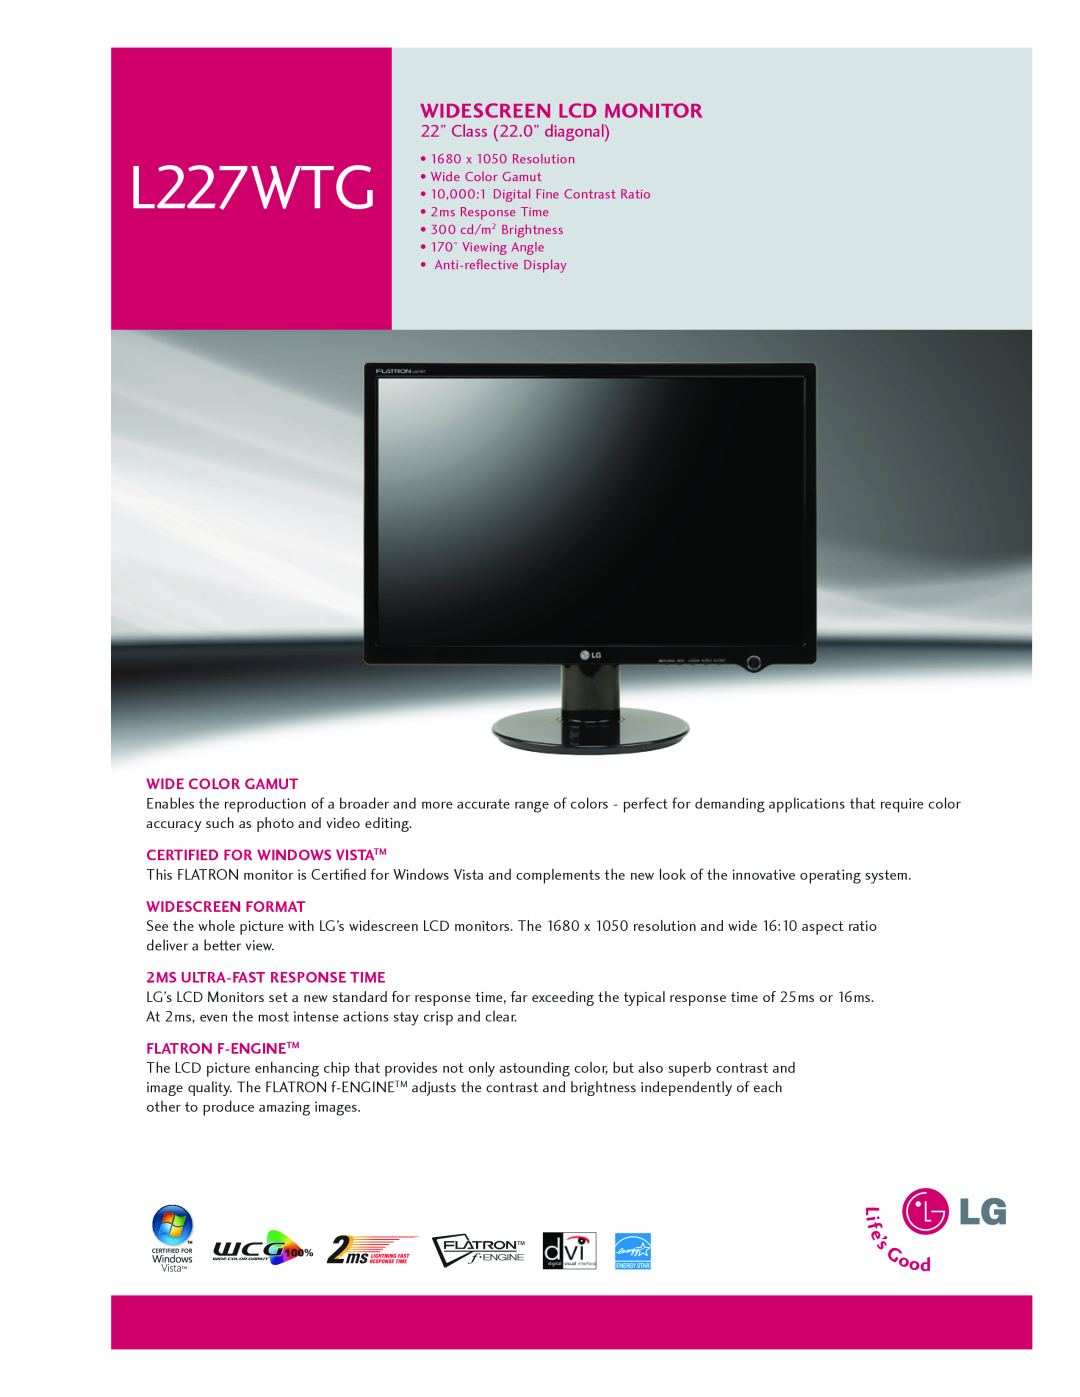 LG Electronics L227WTG manual Widescreen LCD Monitor, 22” Class 22.0” diagonal, Wide Color Gamut, widescreen forMat 